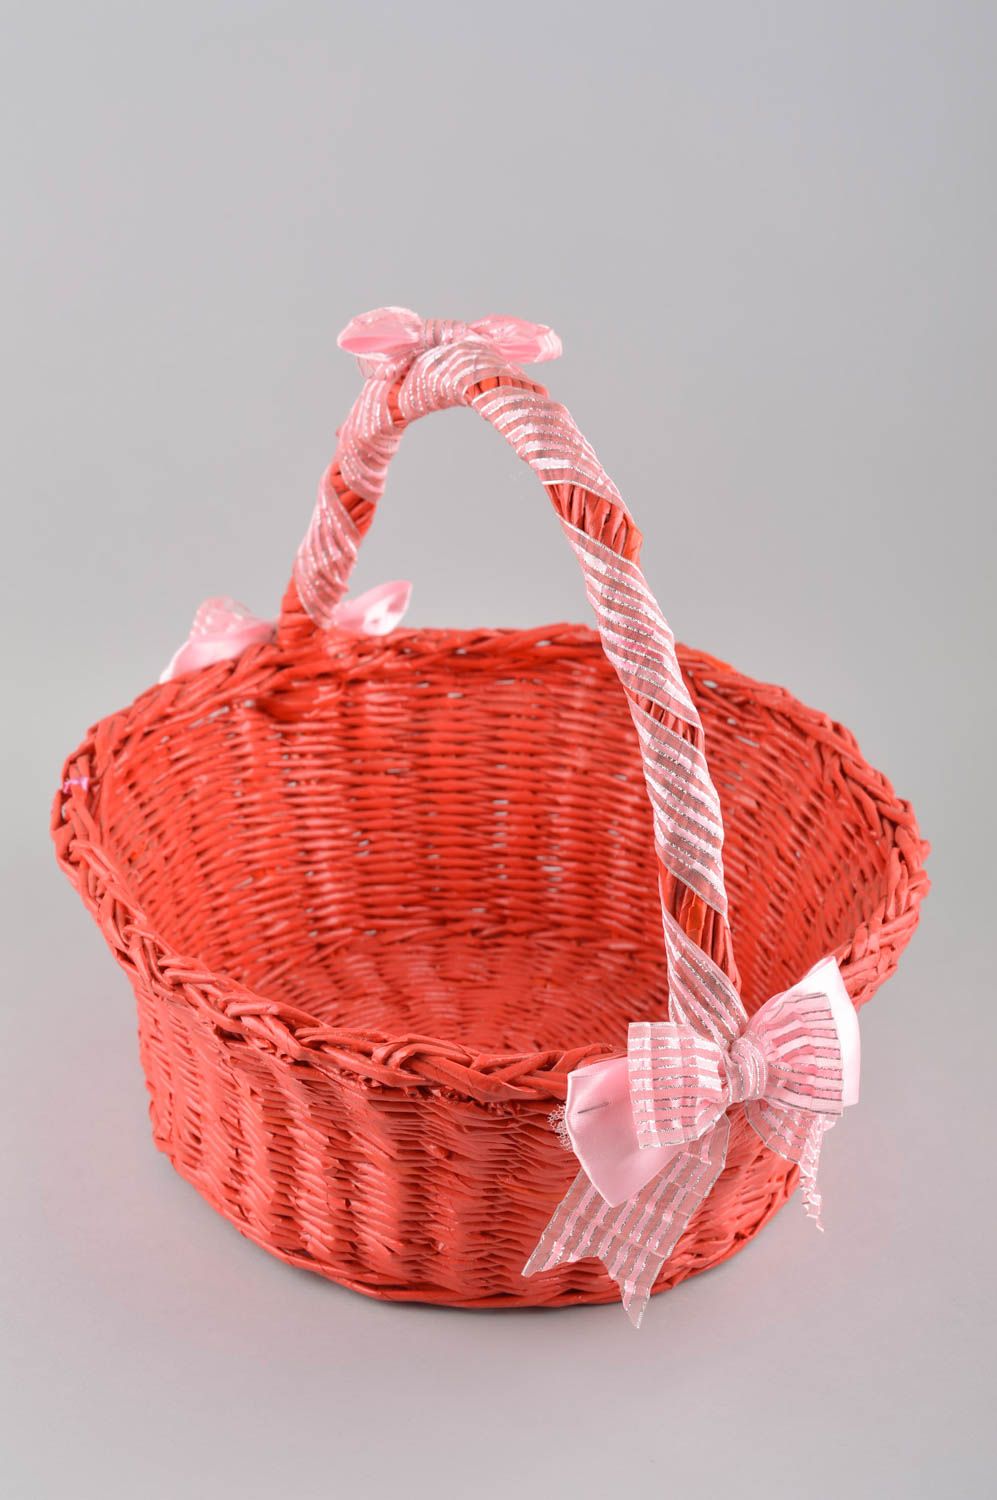 Handmade wicker basket gift basket pink handmade basket unusual gift home decor photo 2